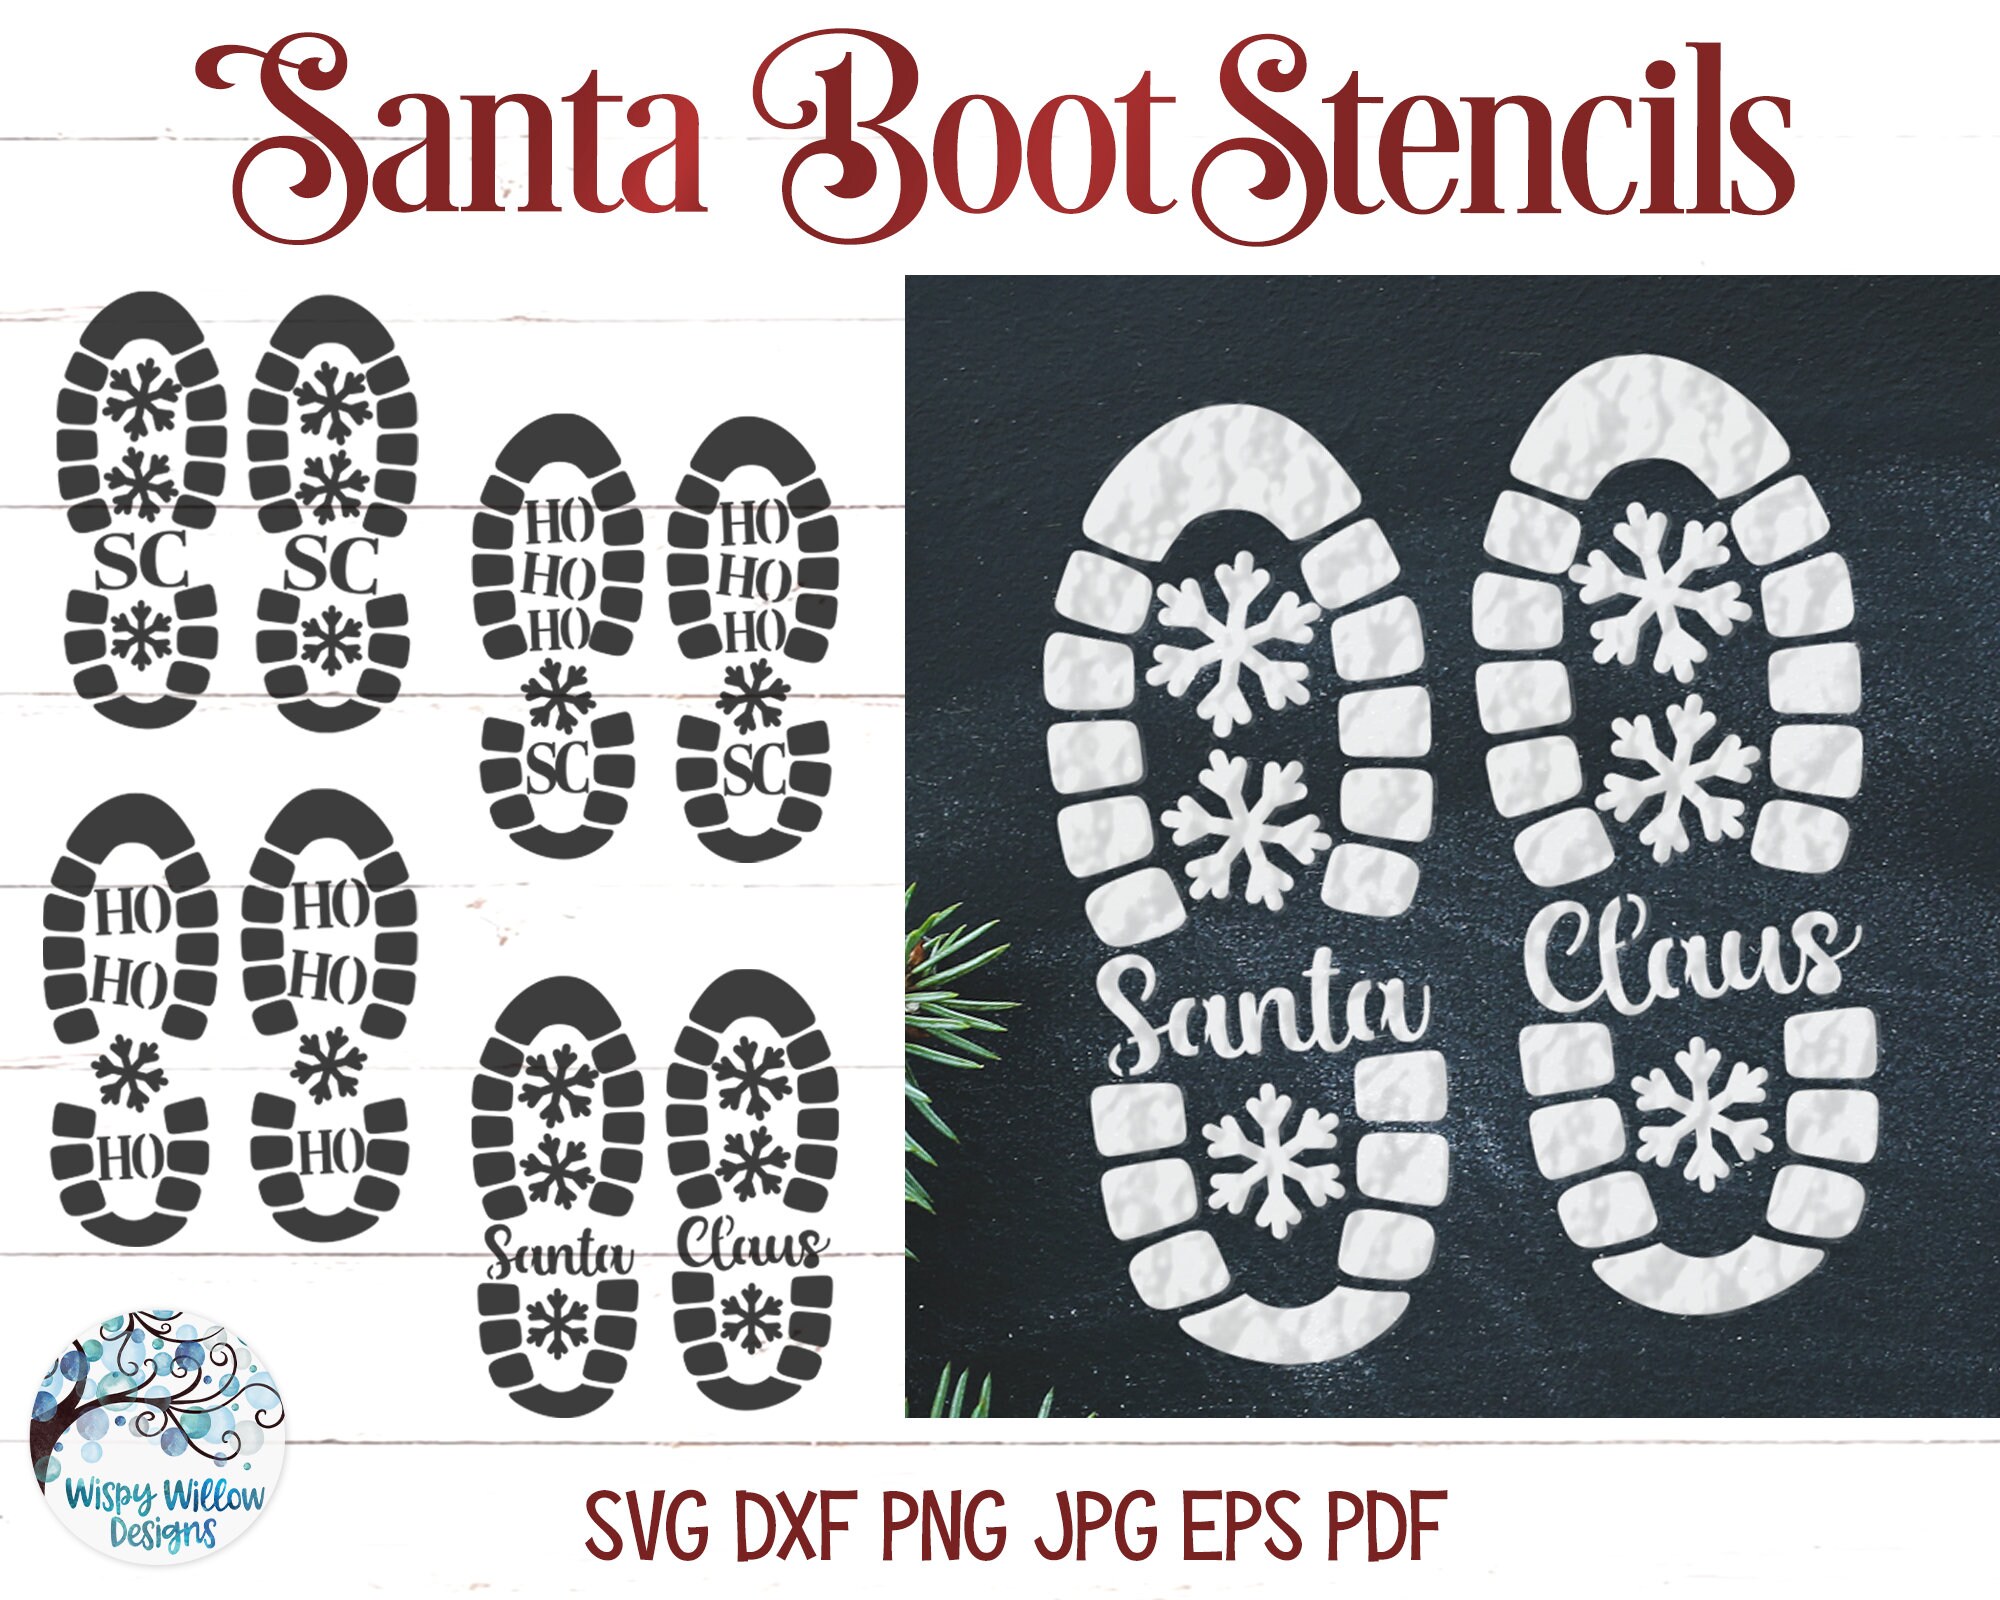 Santa Boots Stencil